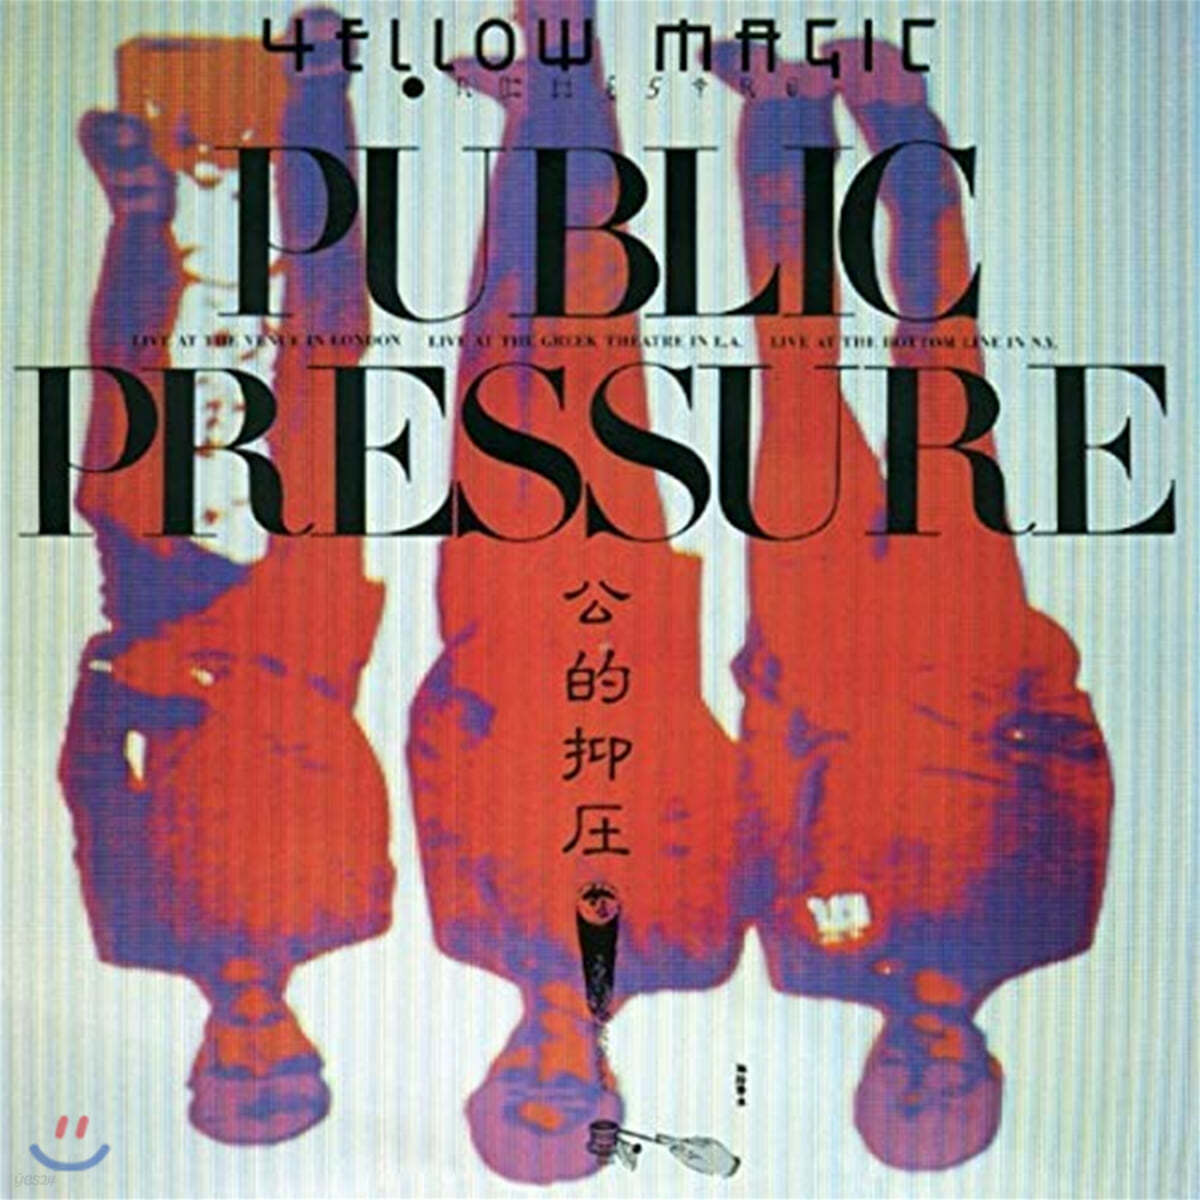 Yellow Magic Orchestra - Public Pressure 옐로우 매직 오케스트라 첫 라이브 앨범 [LP]